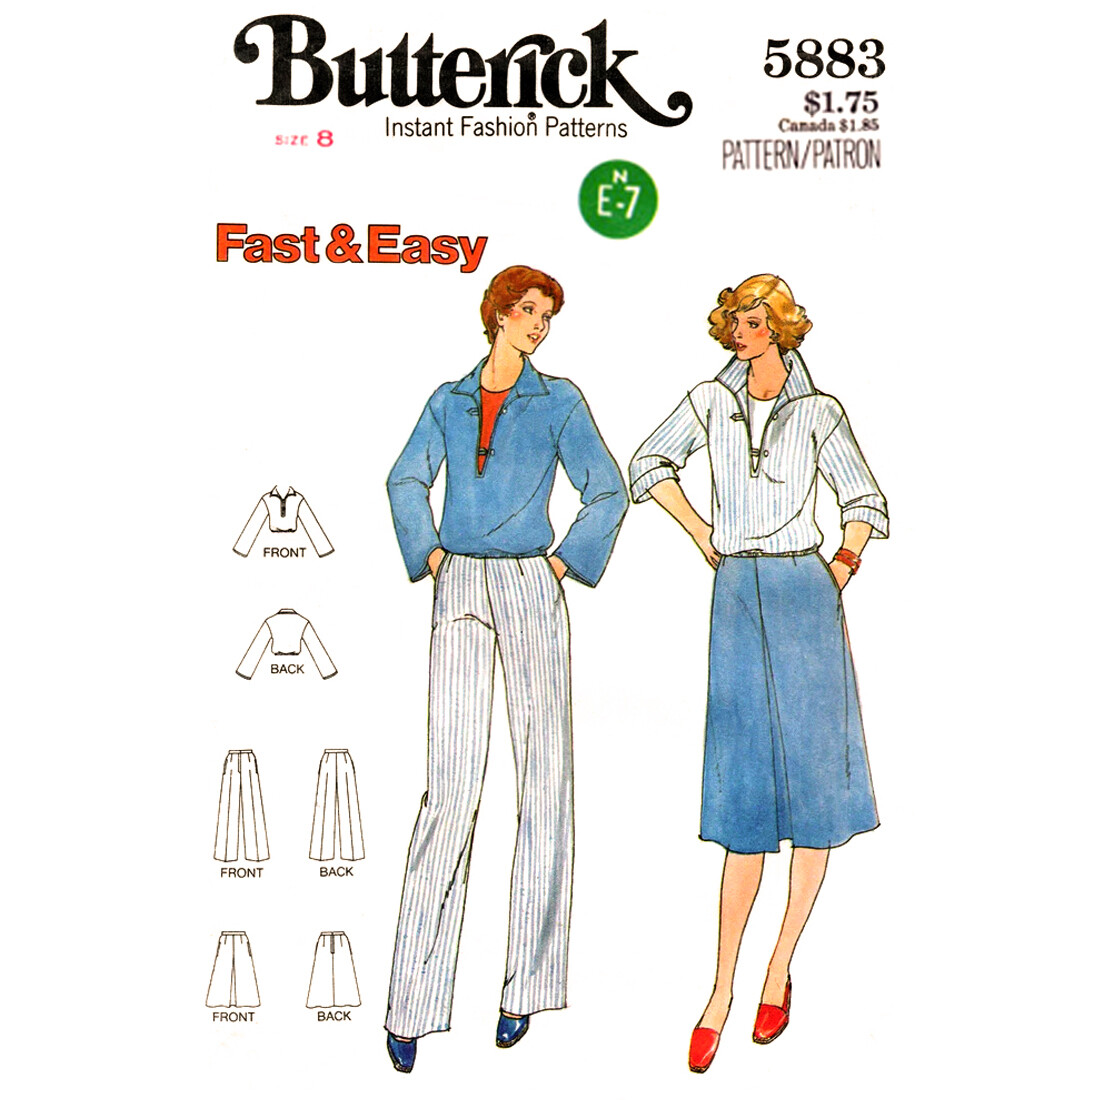 Butterick 5883 pattern